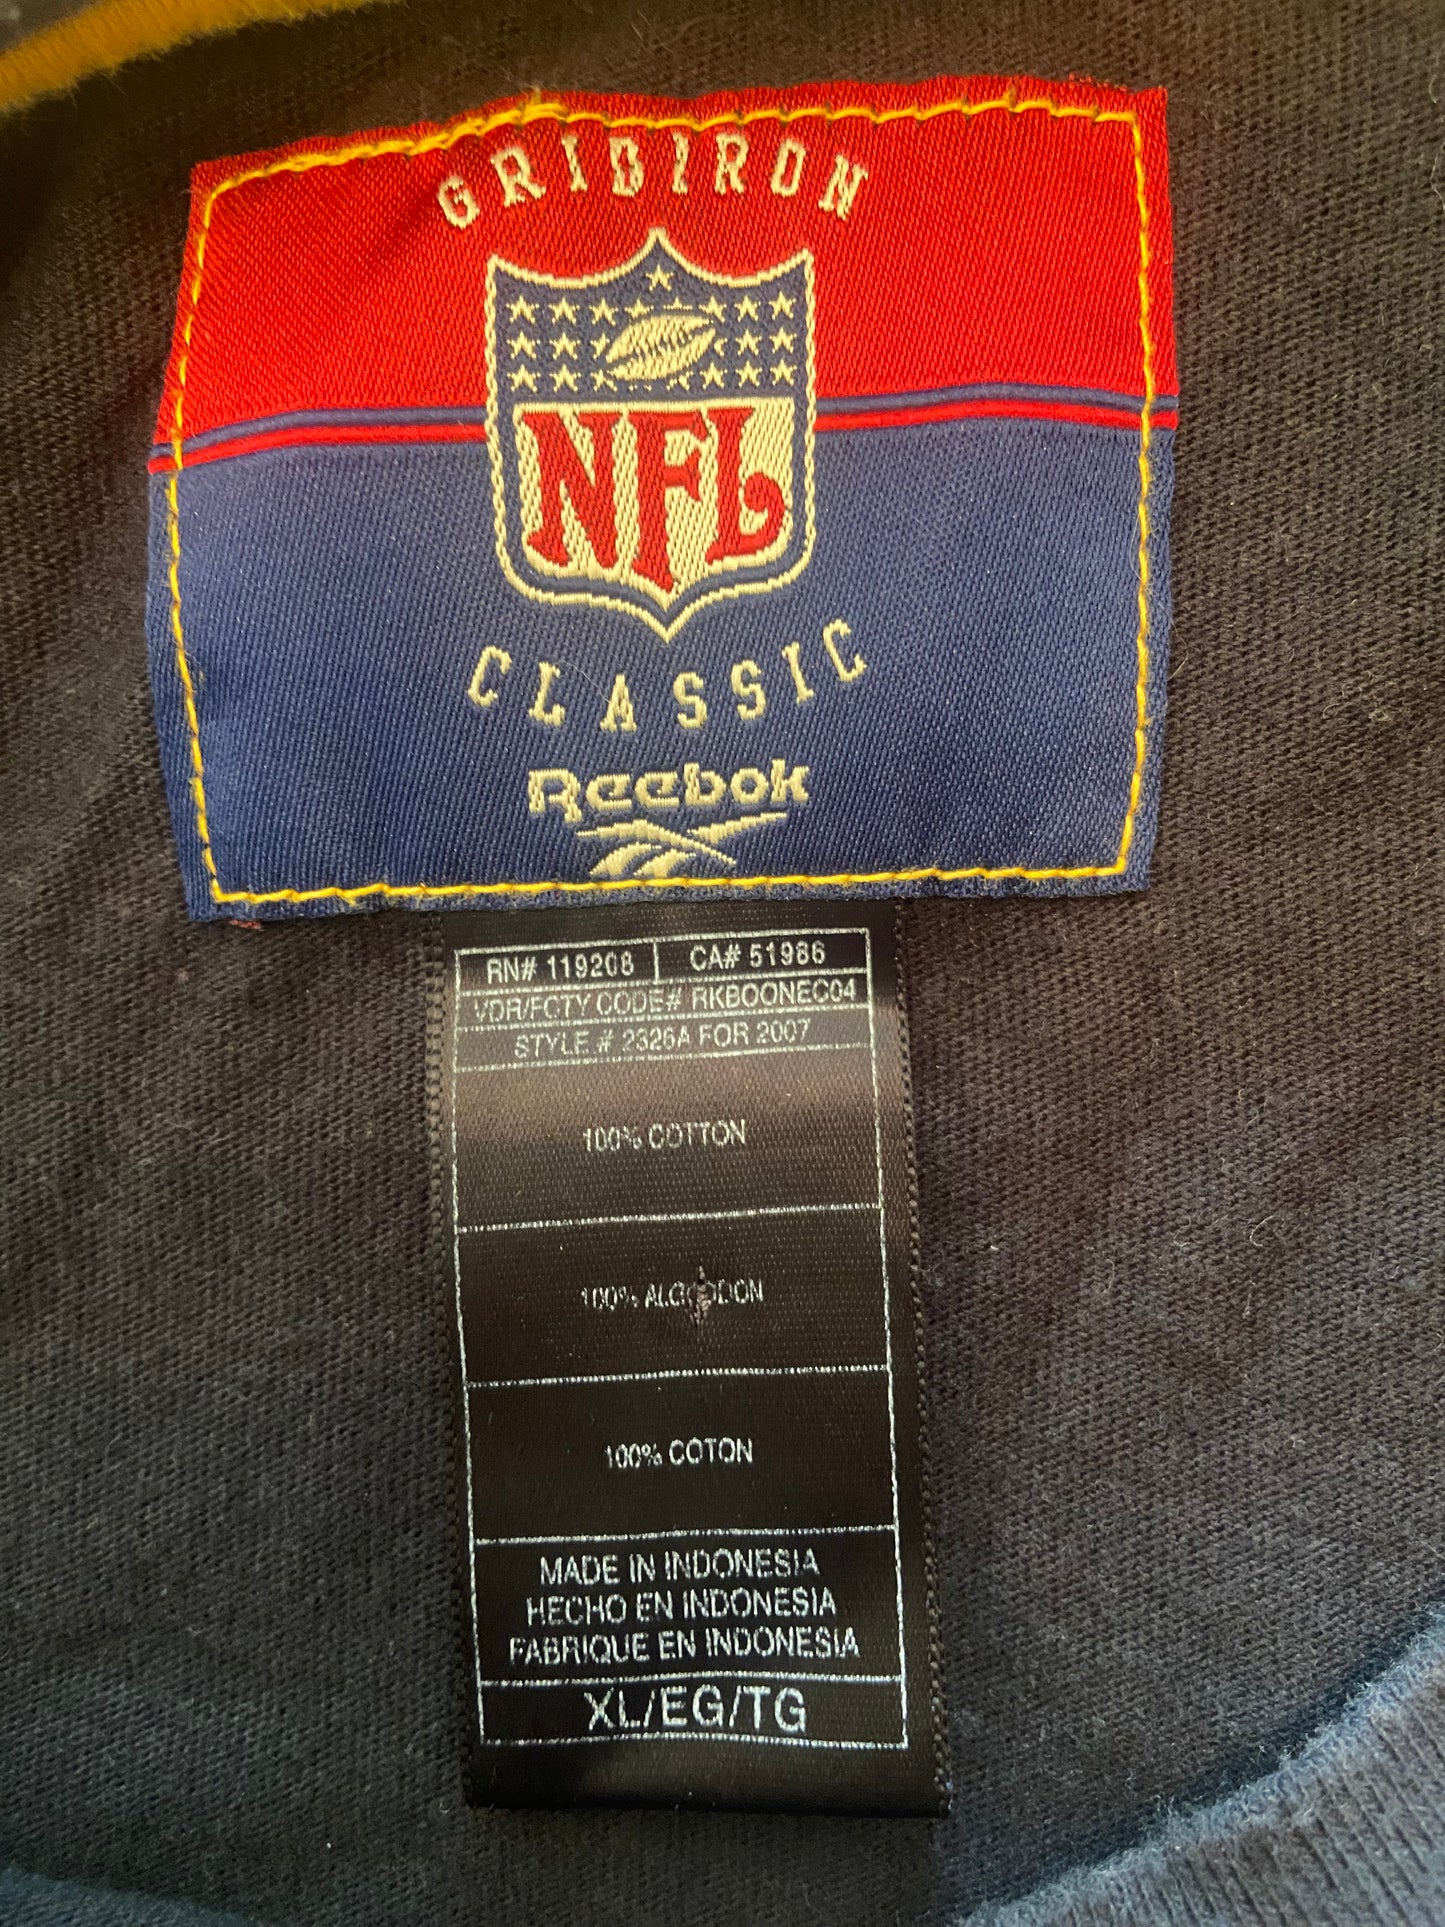 Reebok Gridiron Classics Steelers Shirt